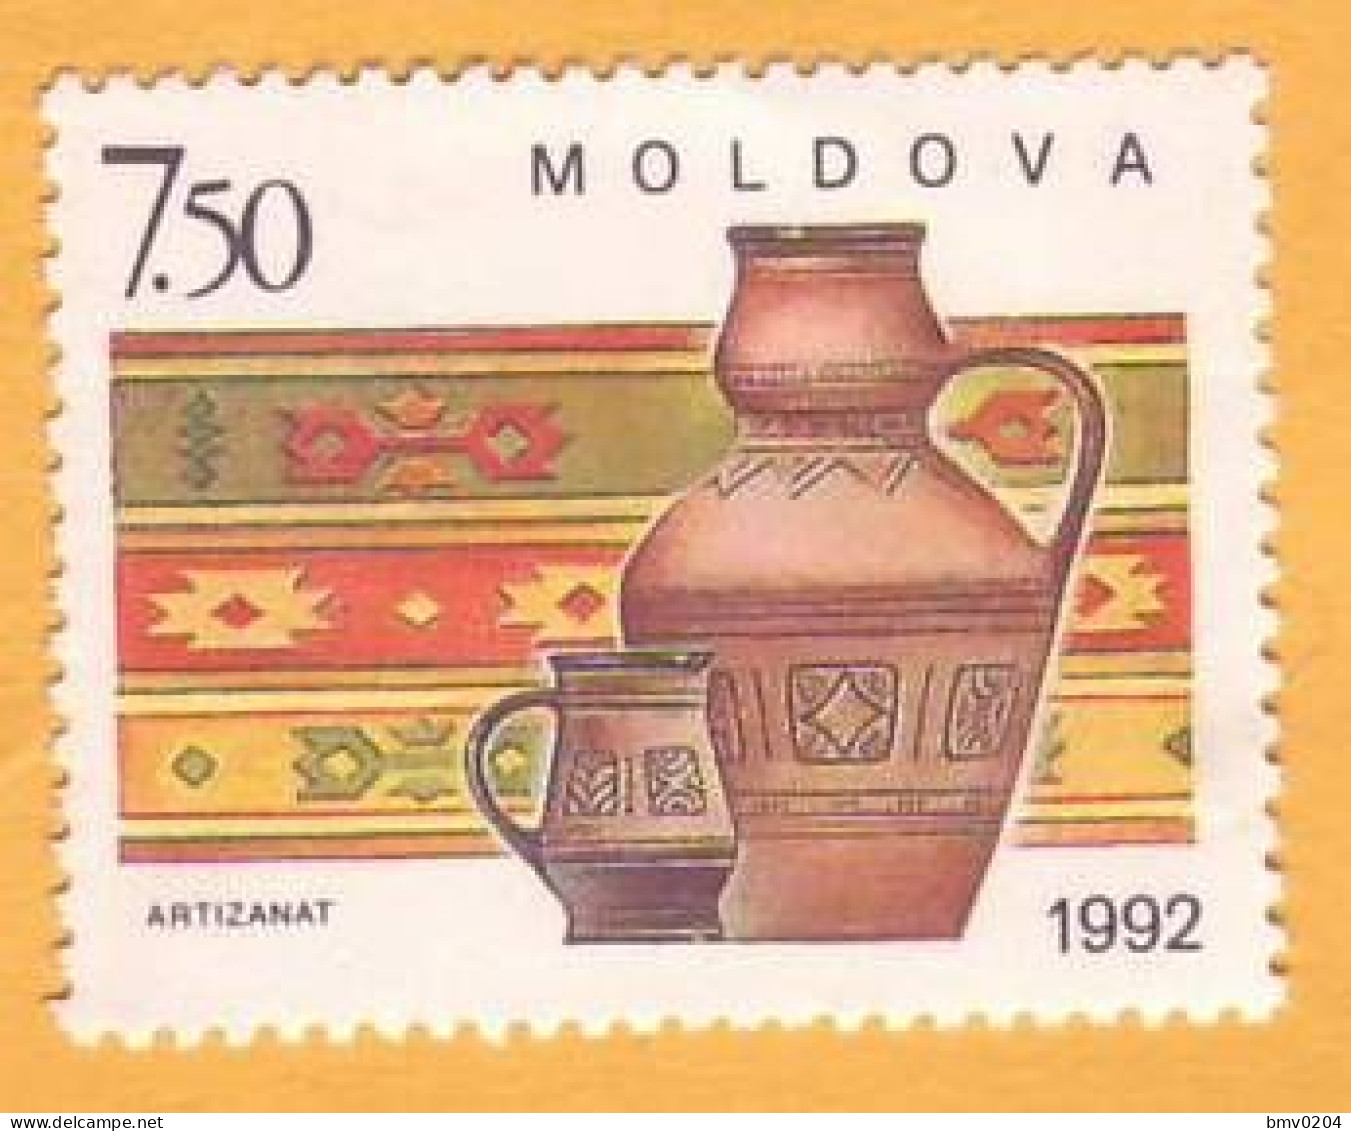 1992 Moldova Moldavie Moldau  Artizanat  1v Mint - Moldova